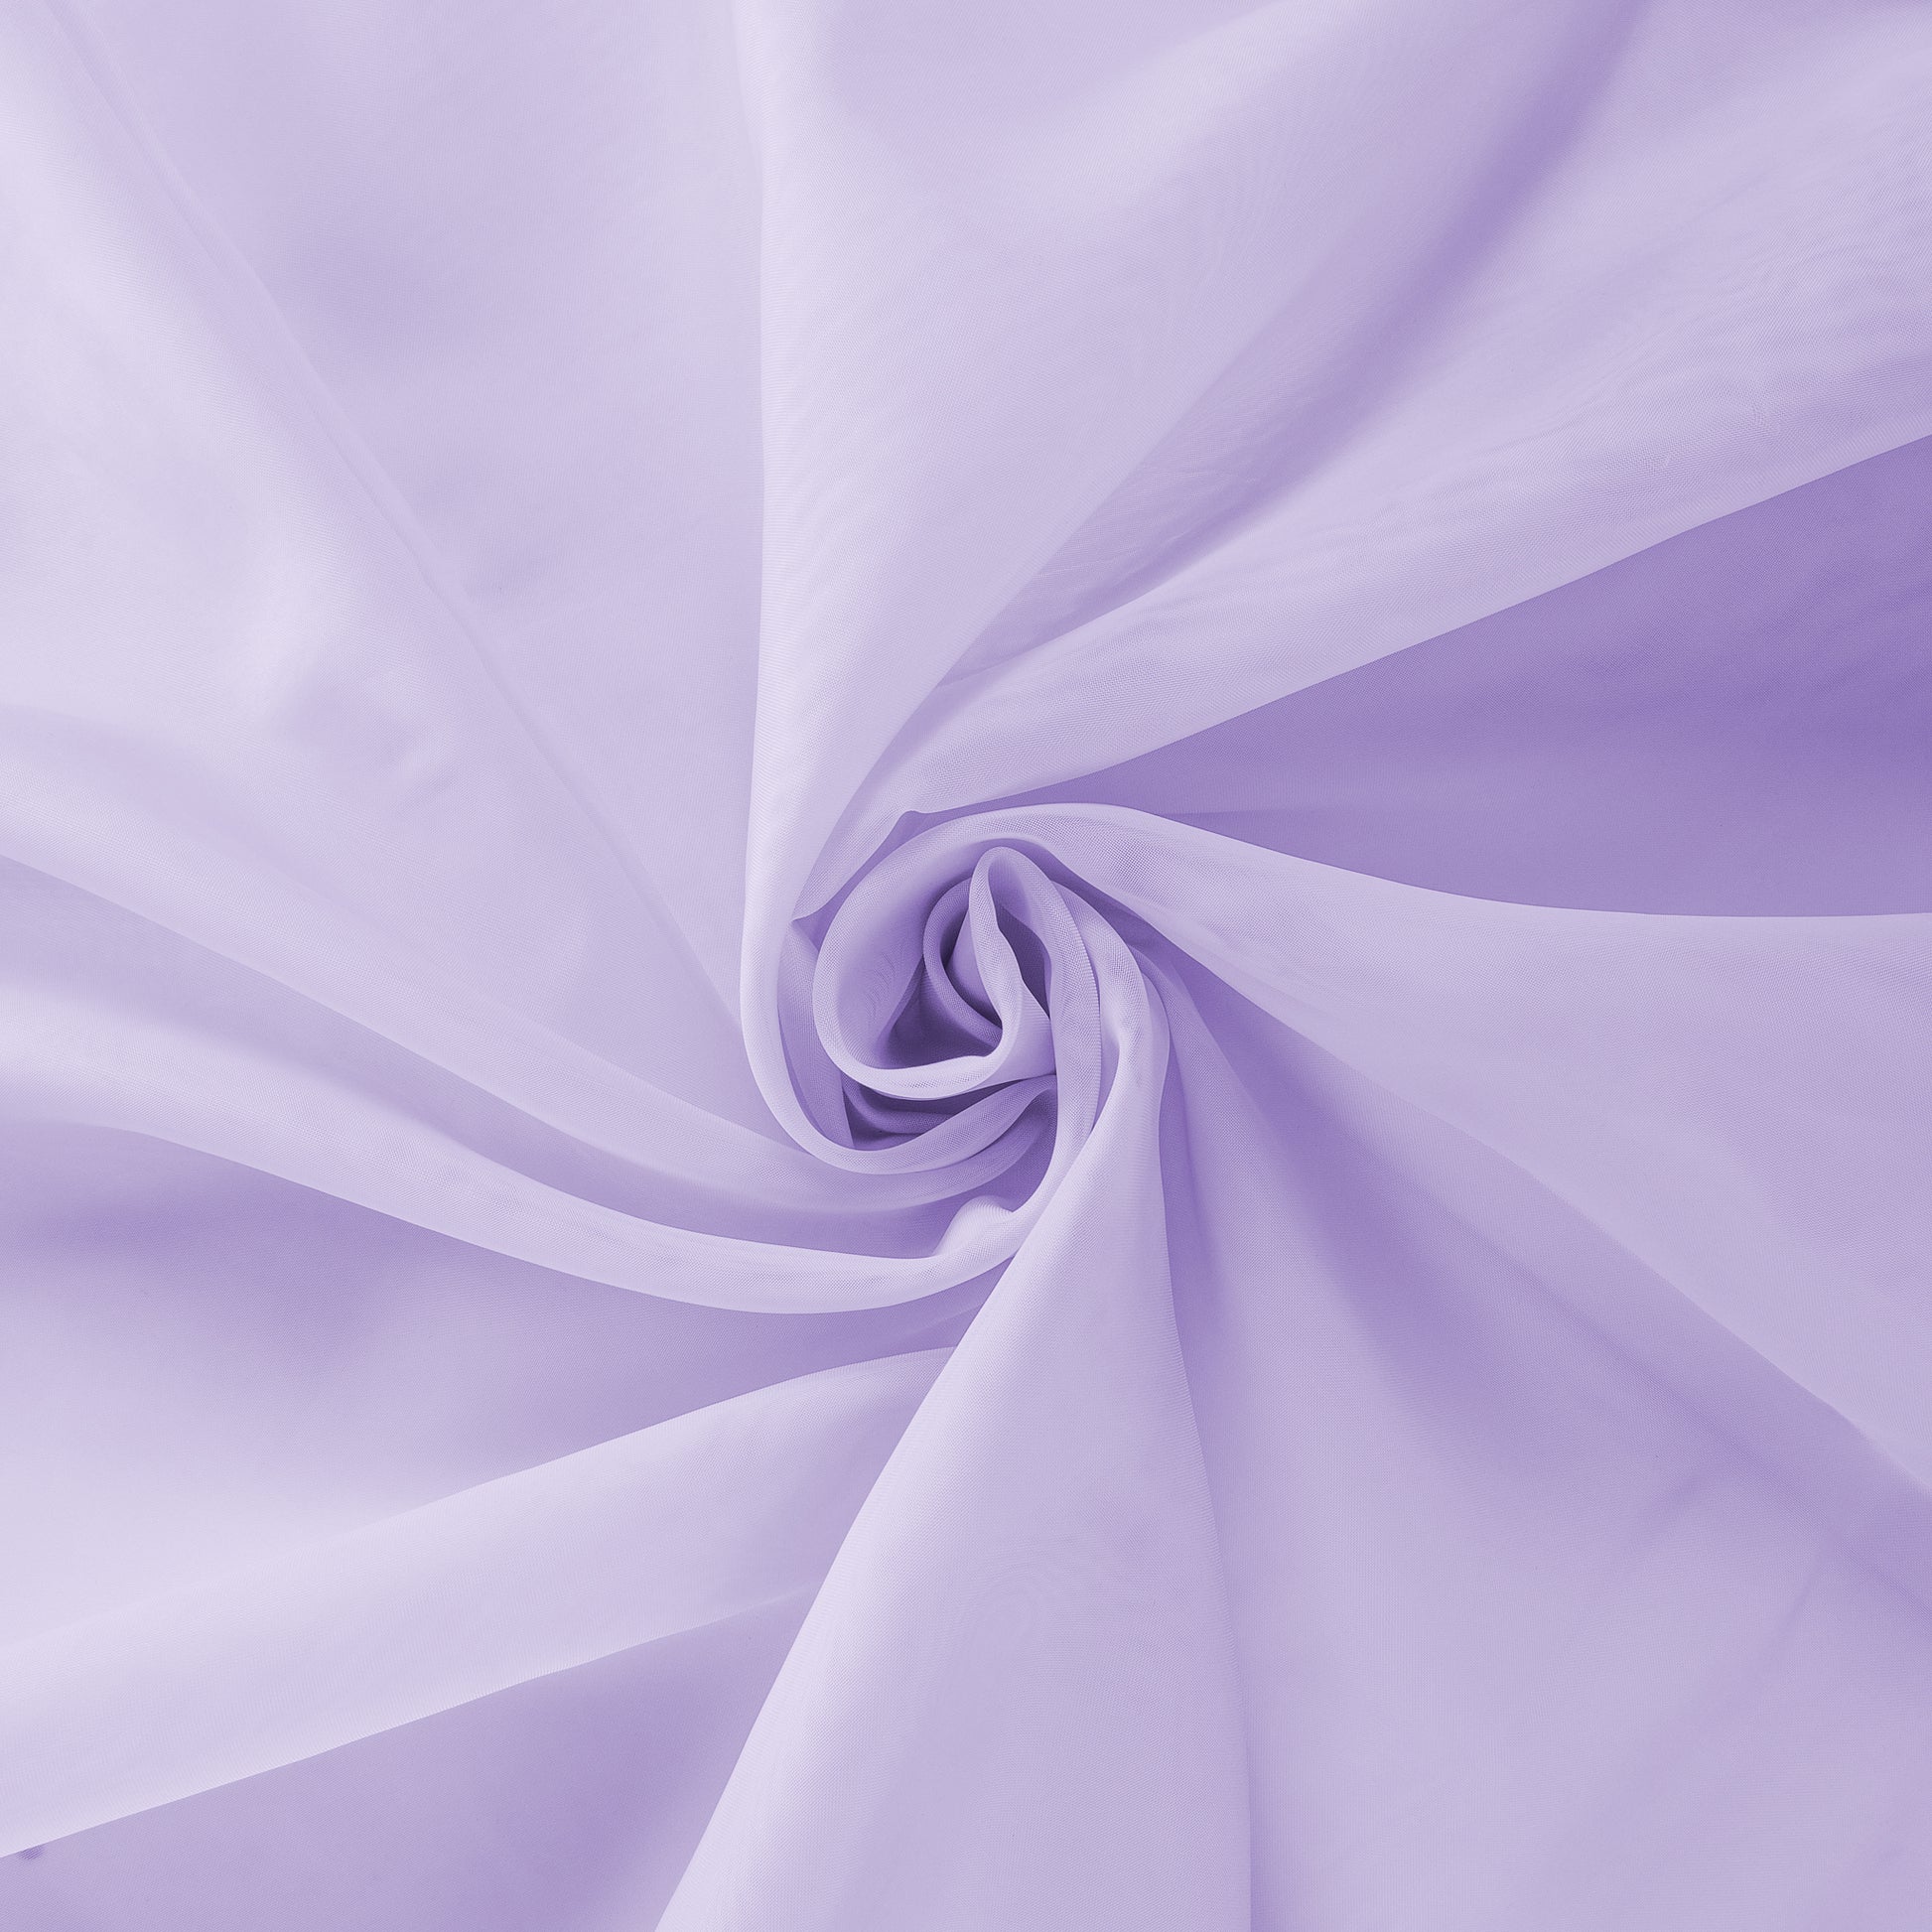 10 yards x 118" Flame Retardant (FR) Voile Sheer Fabric Roll/Bolt - Lavender - CV Linens